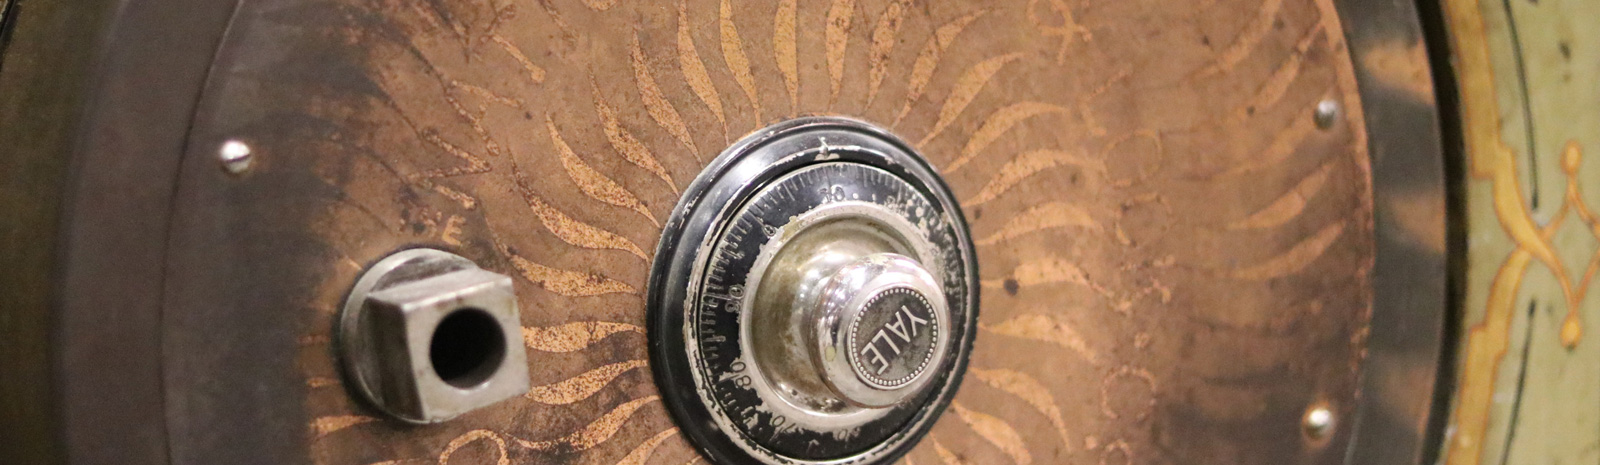 Close up image of safe door.